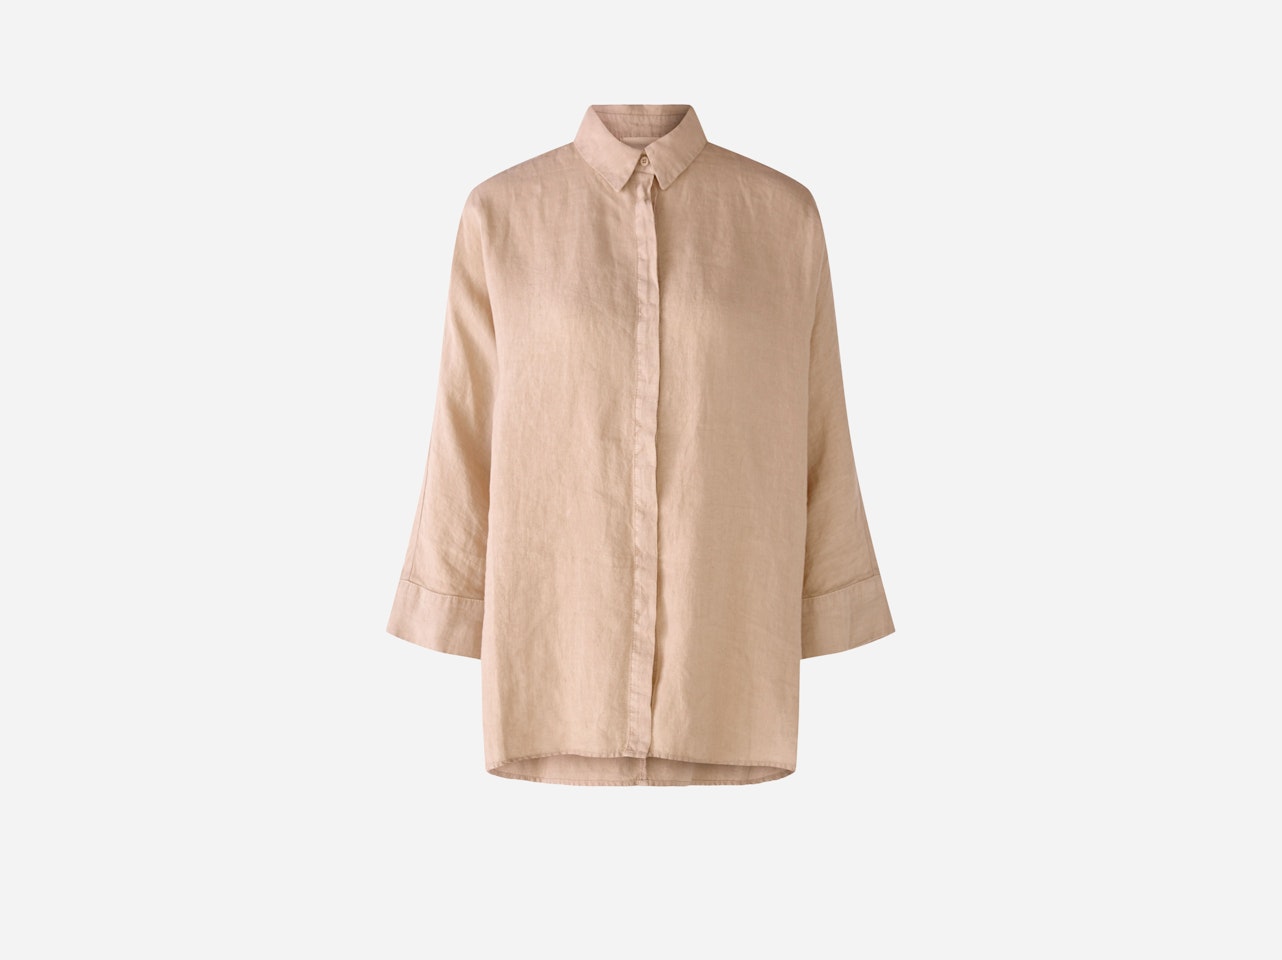 Bild 7 von Shirt blouse 100% linen in light stone | Oui